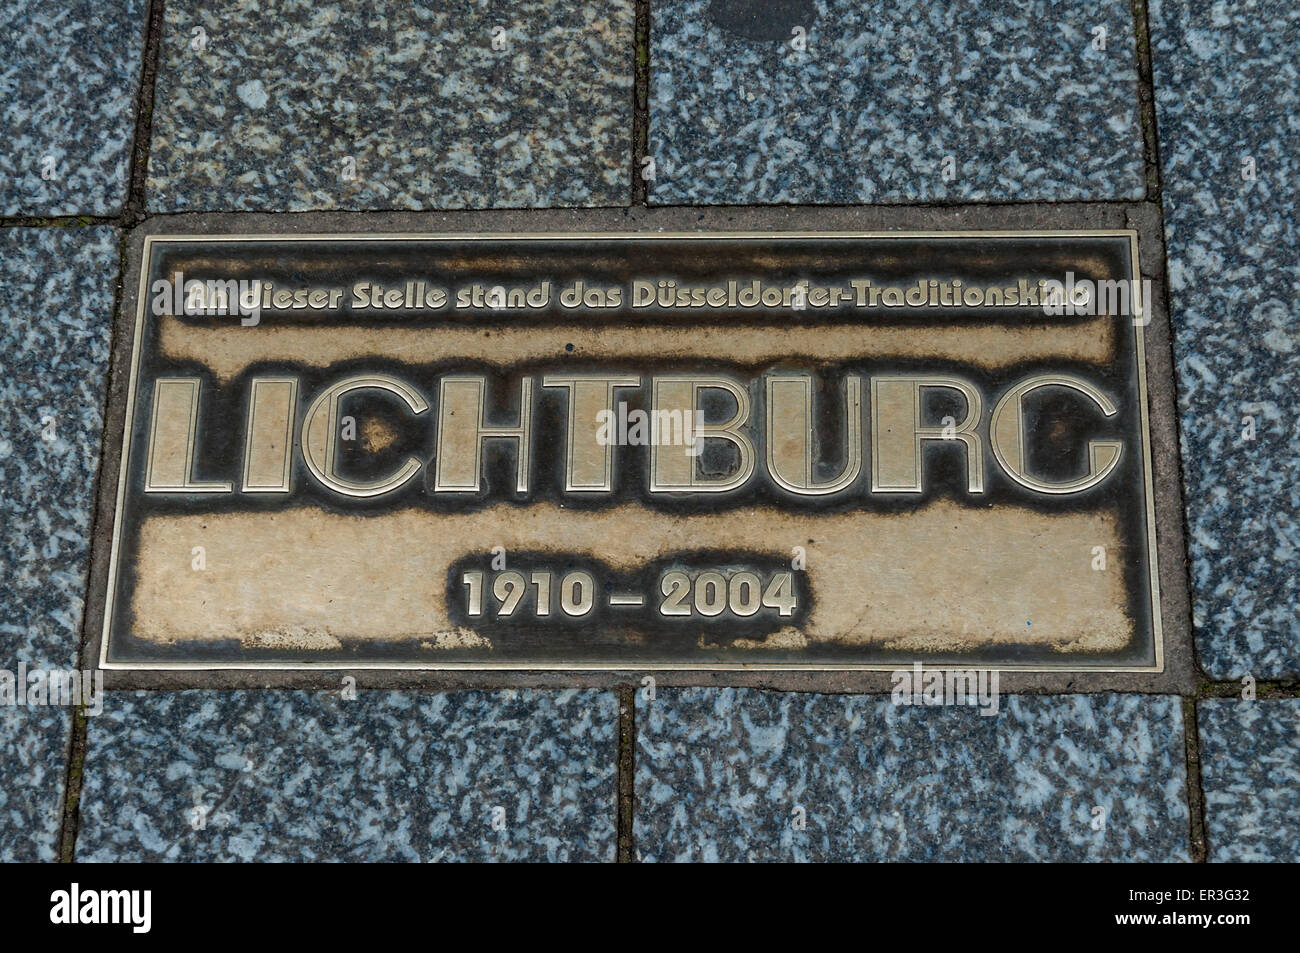 Brass plaque commemorating the Lichtburg, a popular cinema on the Königsallee in Düsseldorf, Germany Stock Photo